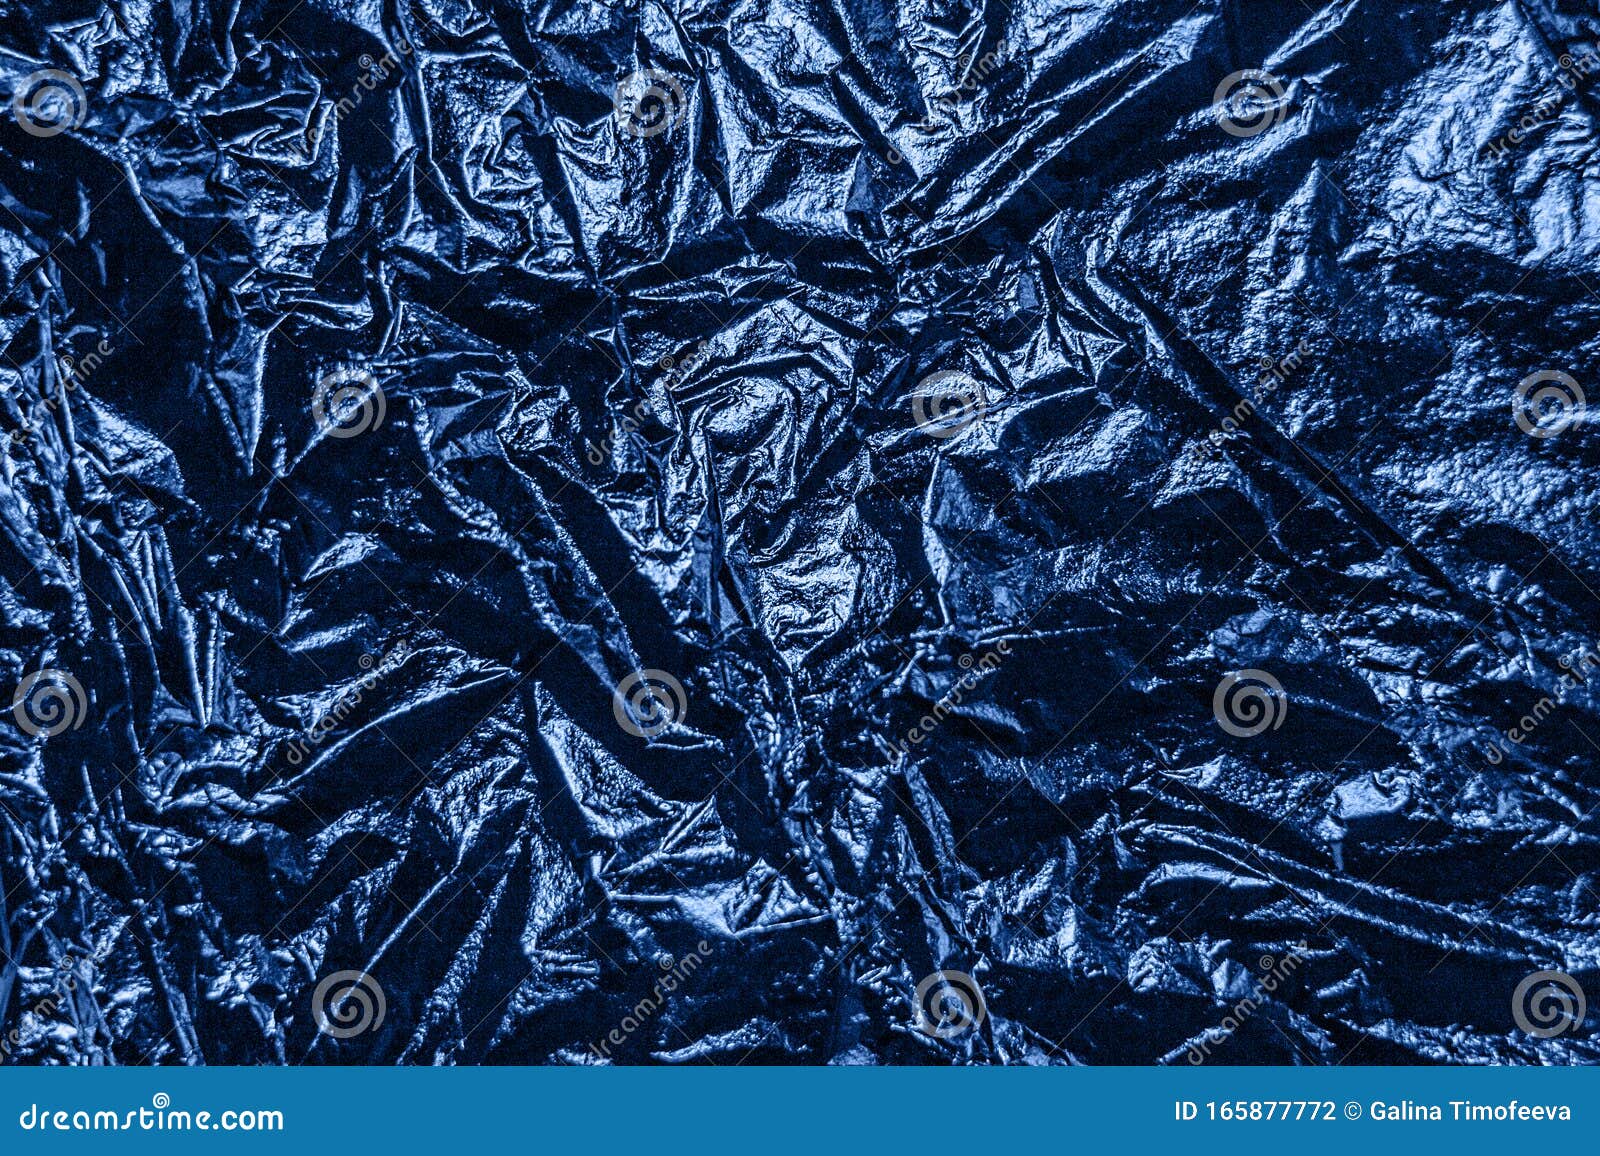 Metallic Foil Tissue Paper - Blue